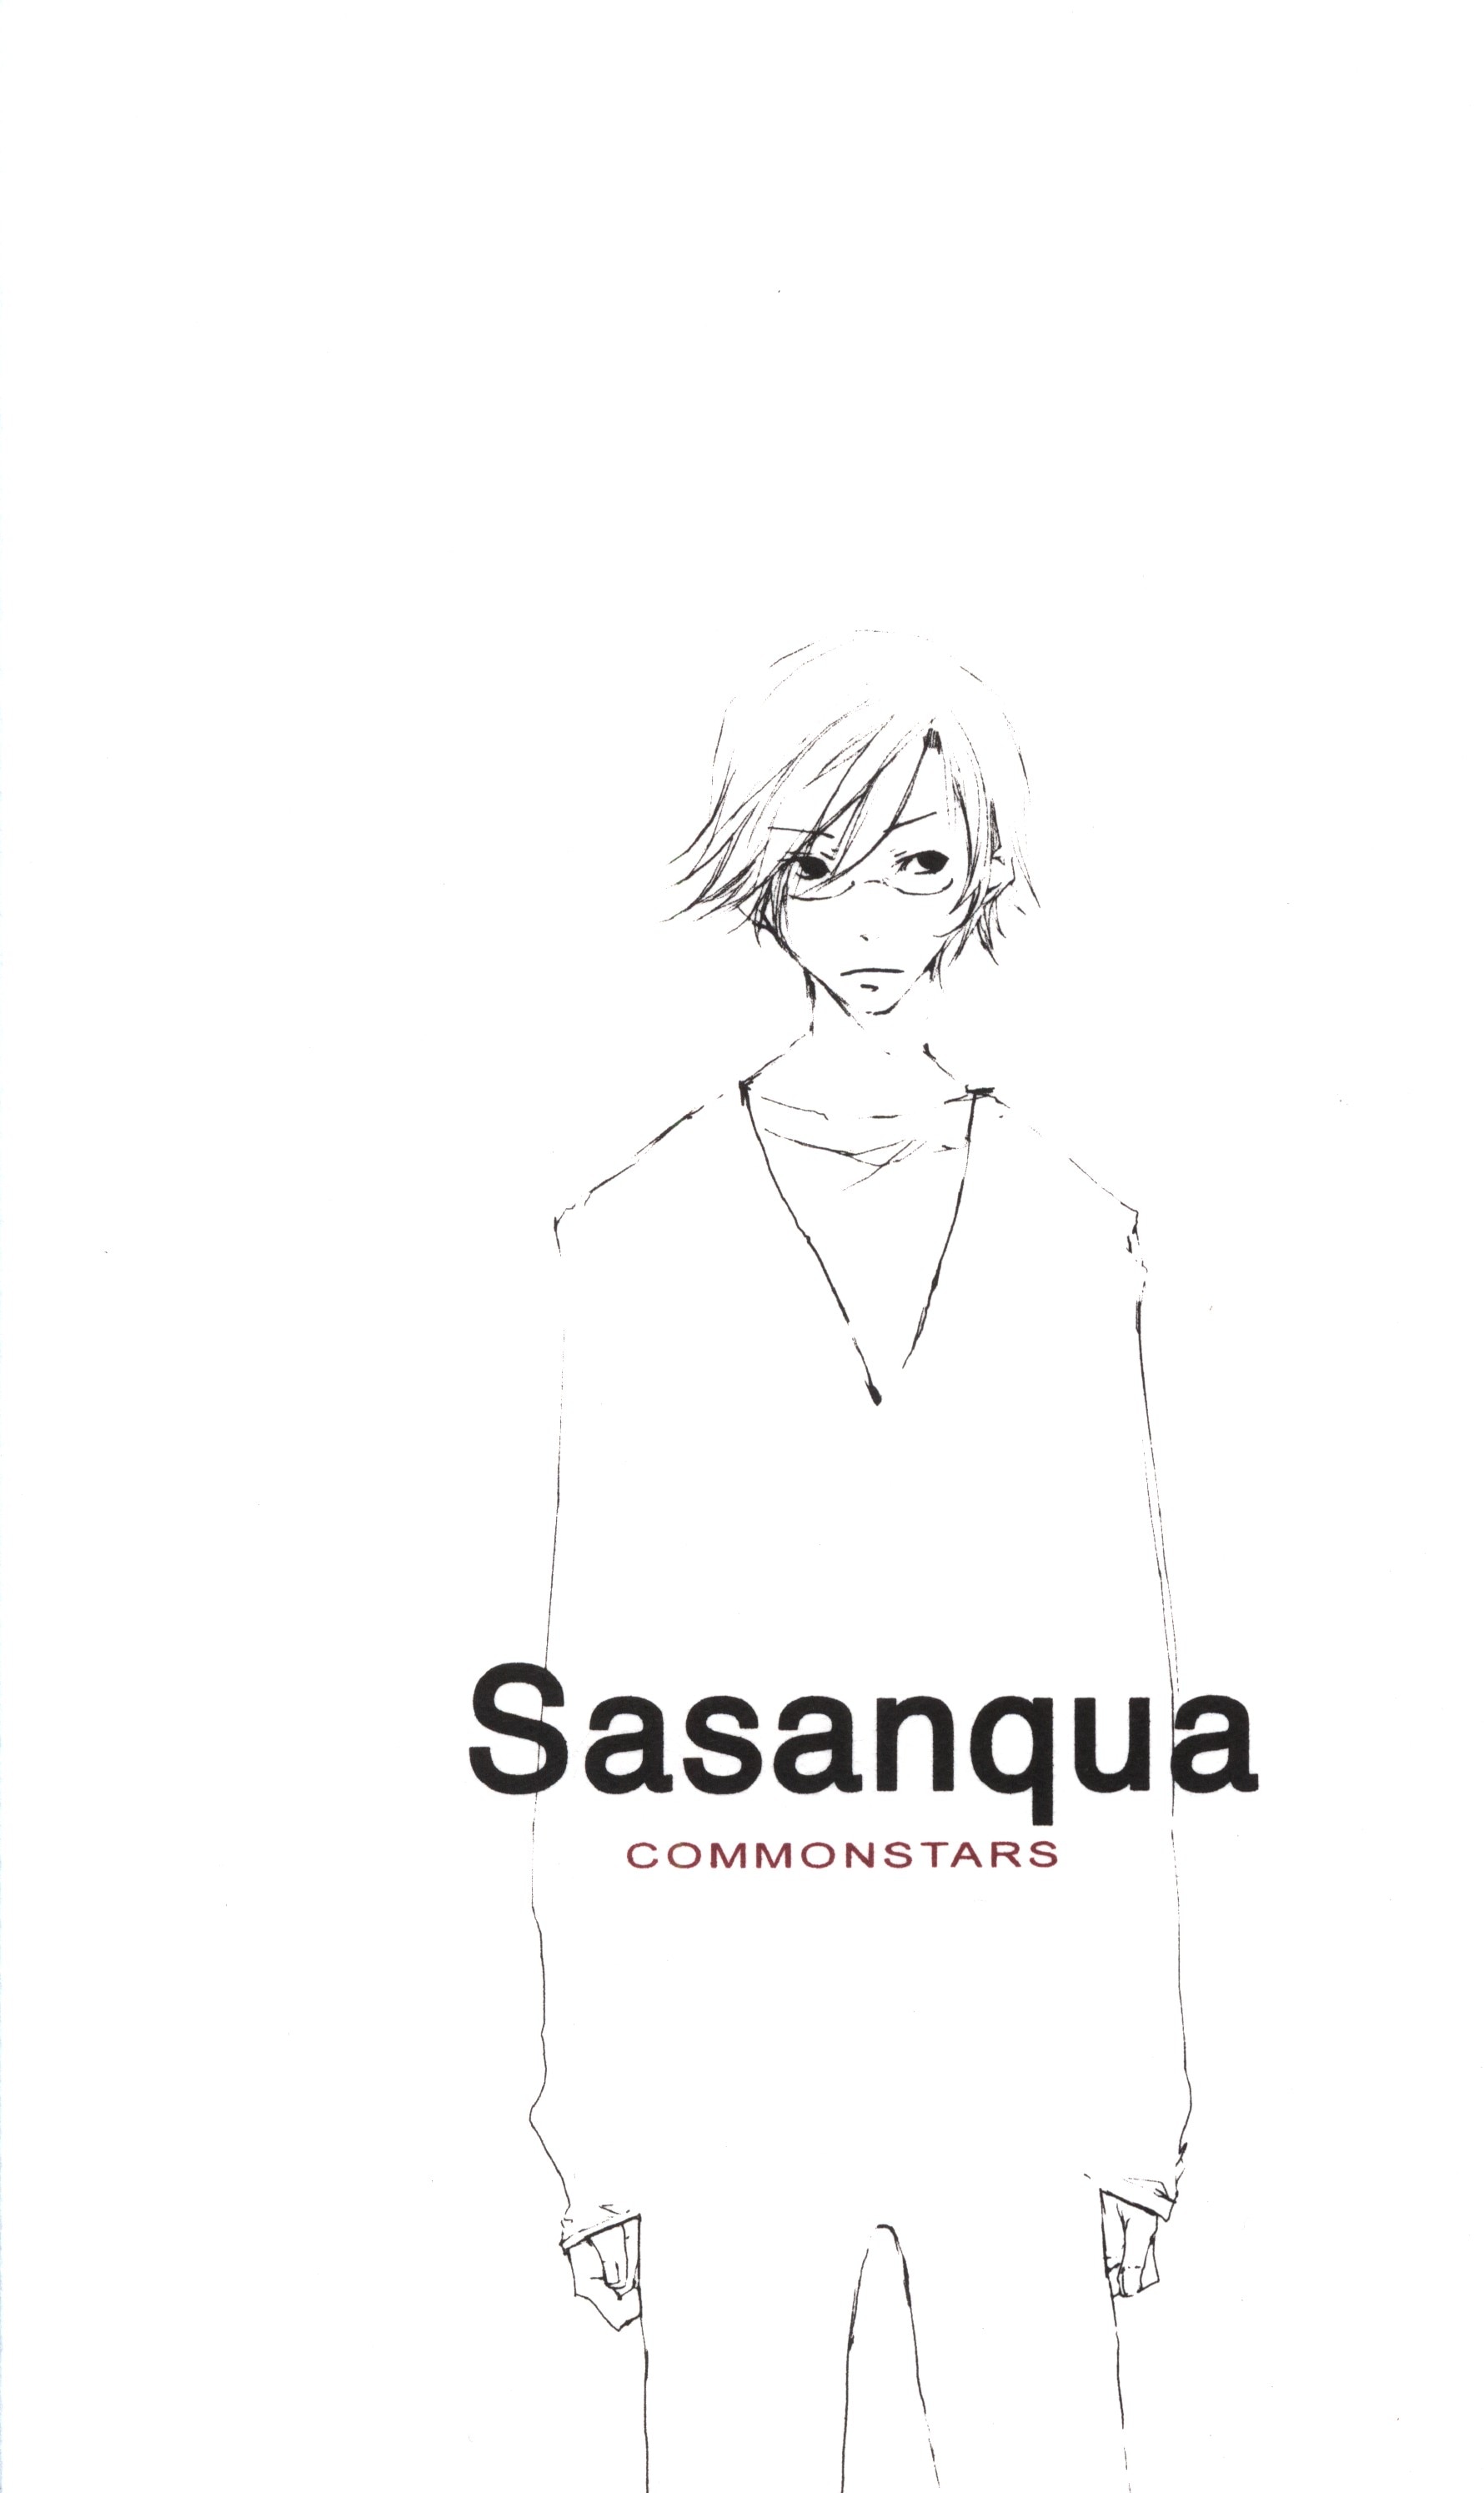 Doujinshi - Prince Of Tennis / Ryoma x Tezuka (Sasanqua) / COMMONSTARS